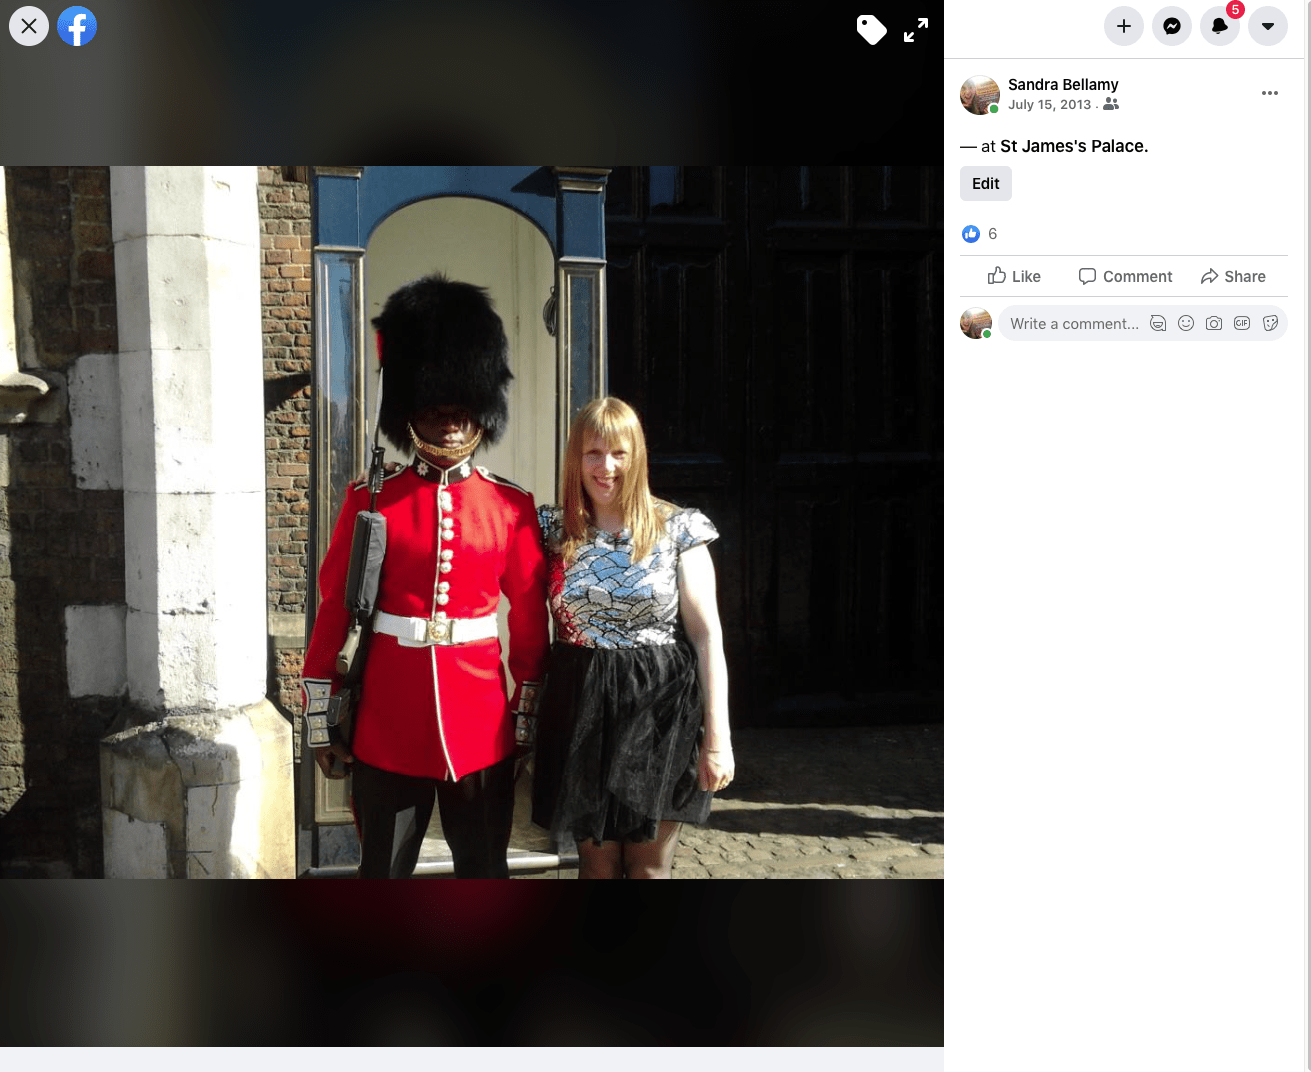 Sandra Bellamy With Guard outside St James's Palace